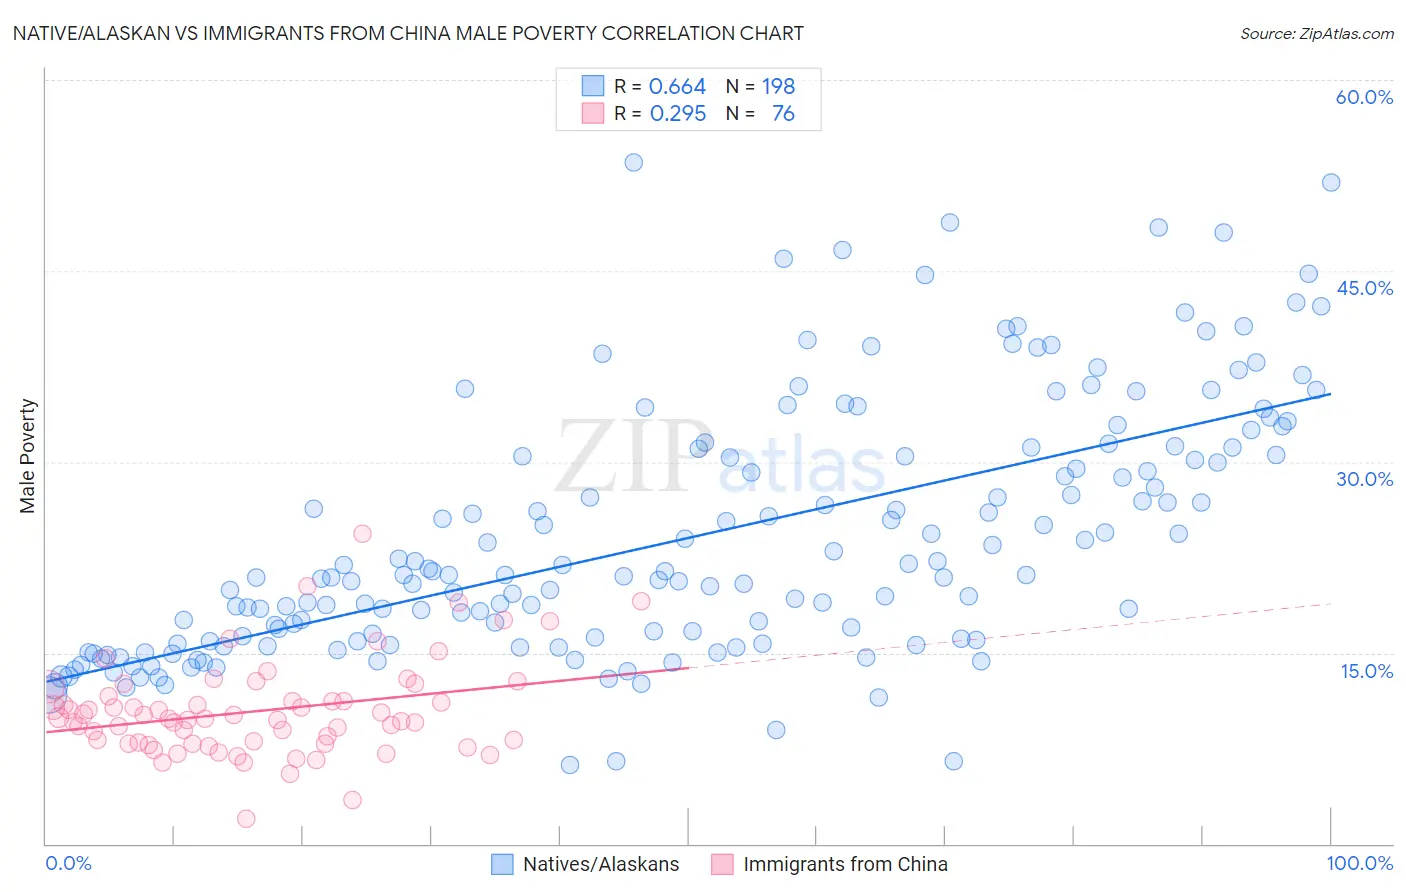 Native/Alaskan vs Immigrants from China Male Poverty